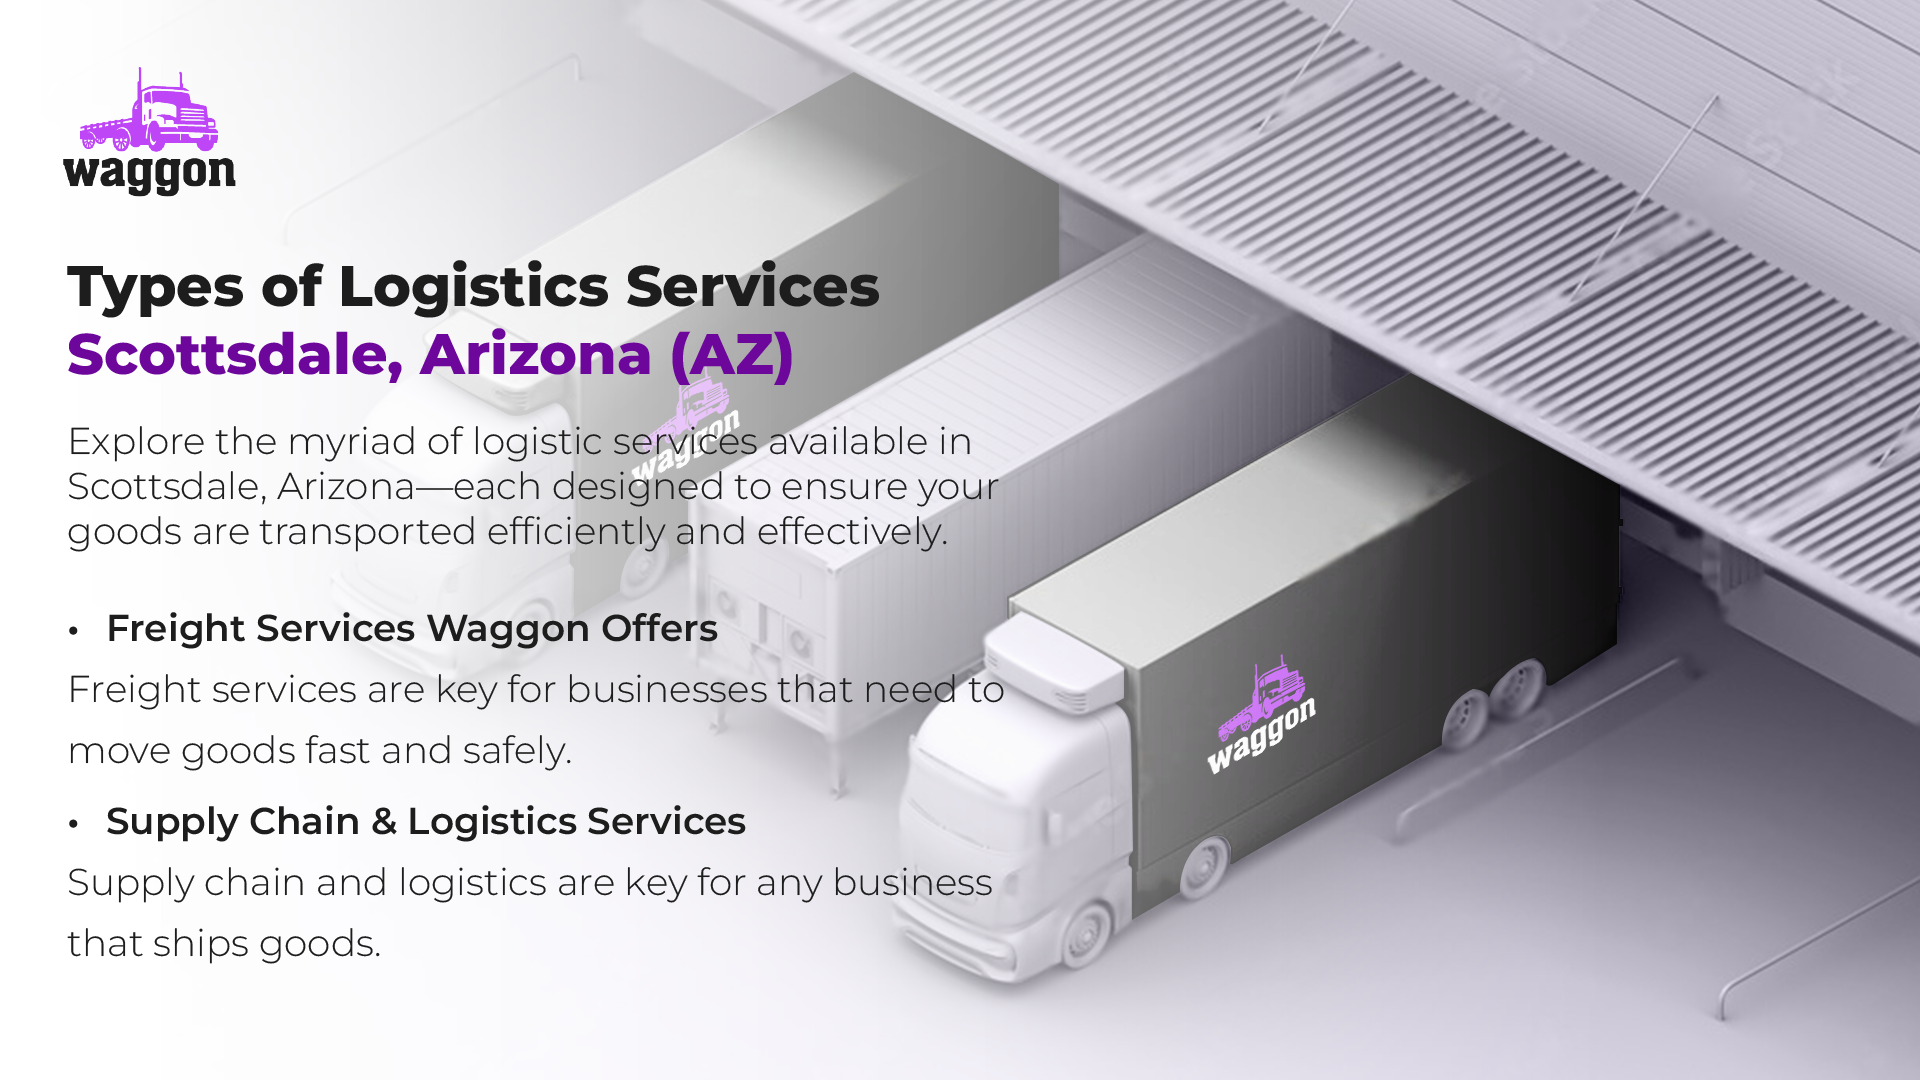 Types of Logistics Services in Scottsdale, Arizona (AZ)